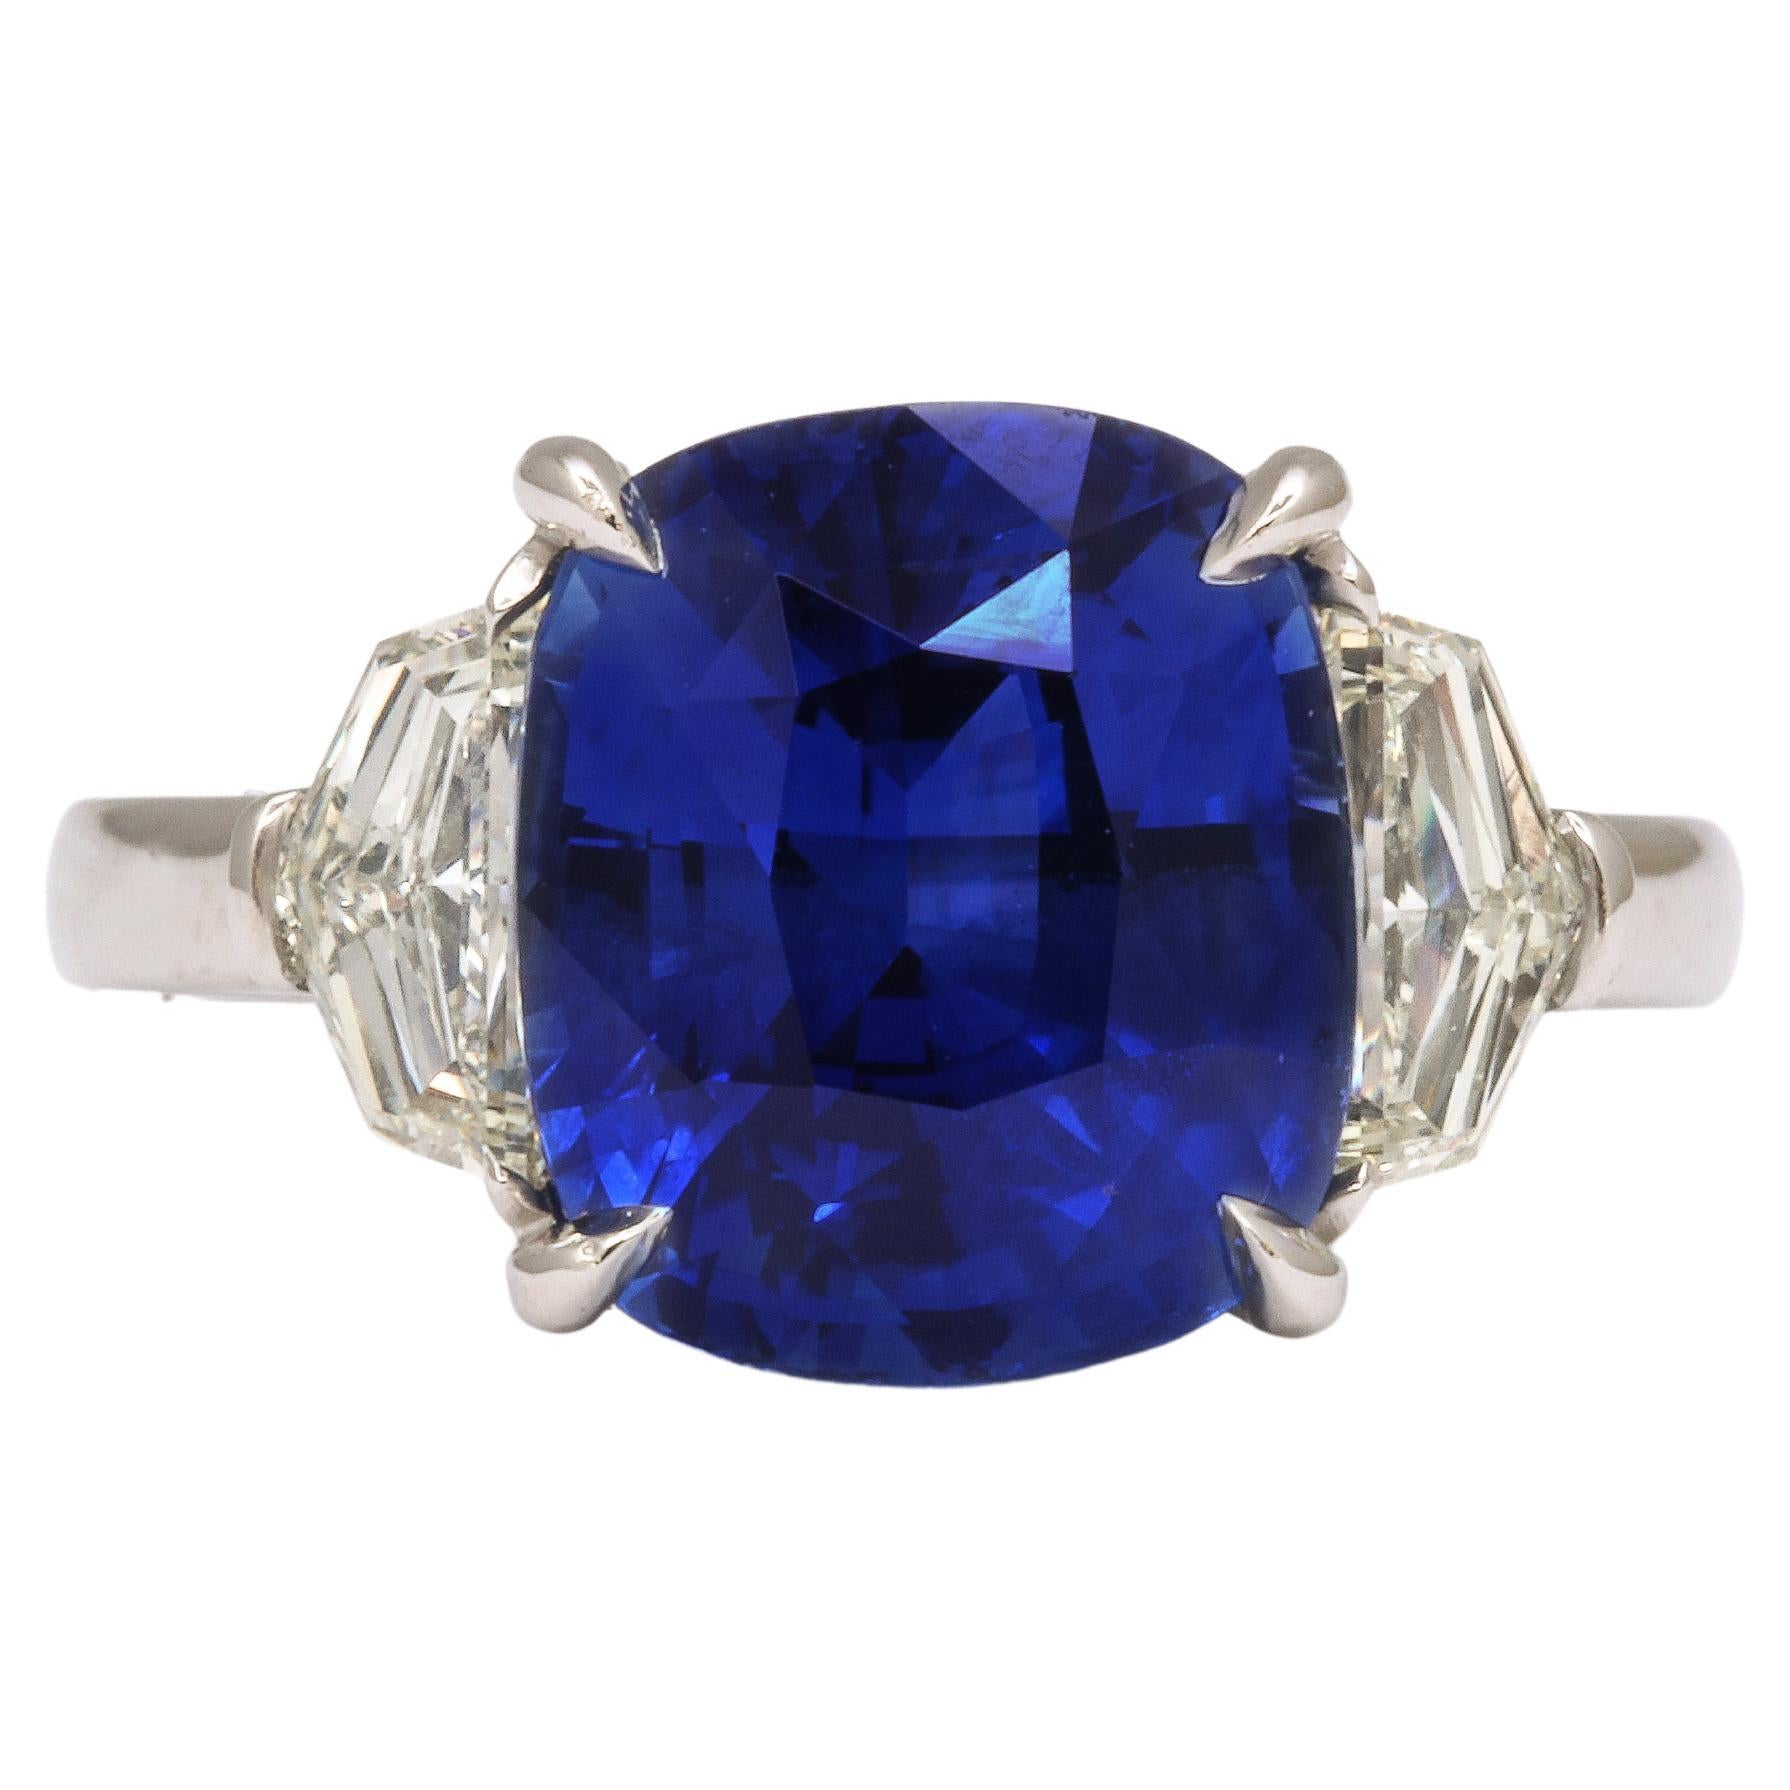 7 Carat Cushion Cut Sapphire and Diamond Ring